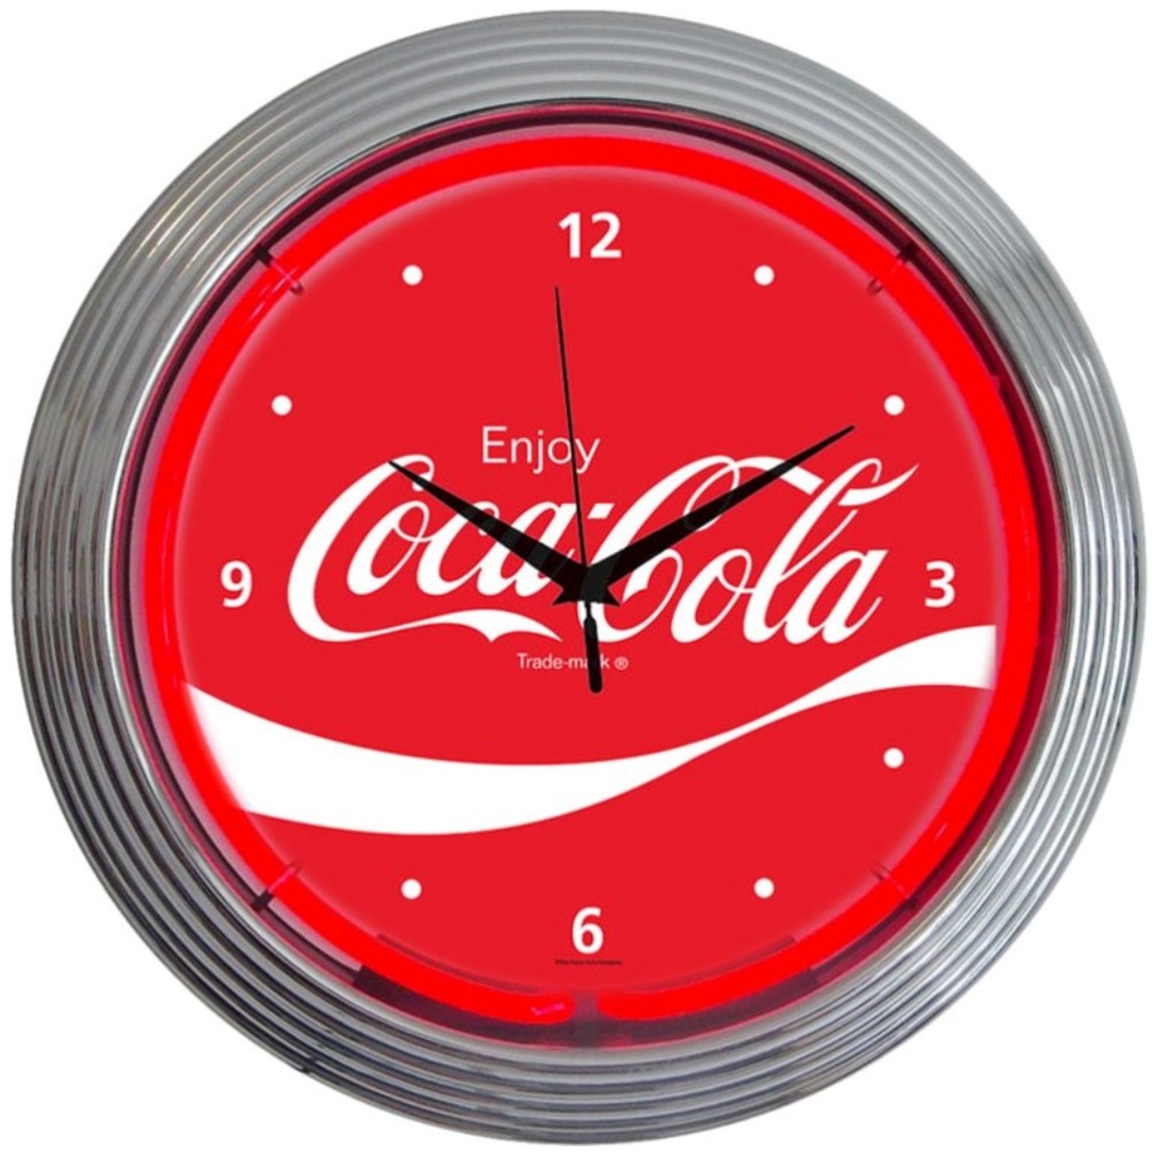 Coca-Cola Neon Clock